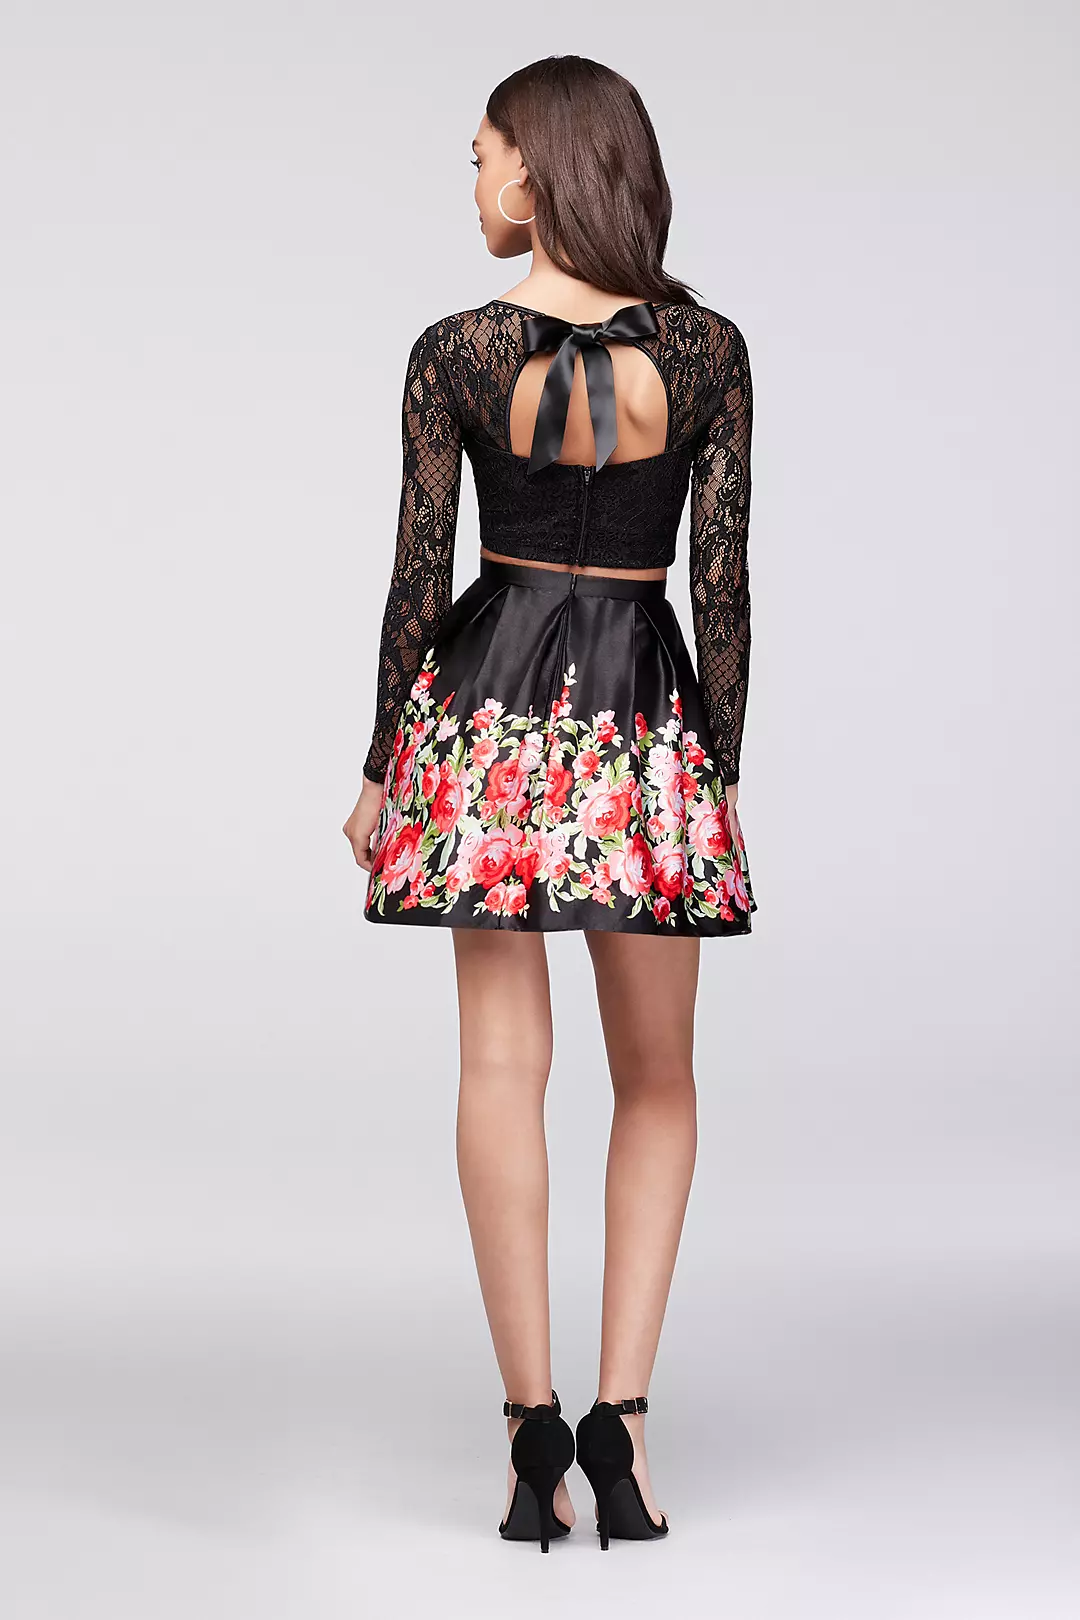 Long-Sleeve Lace Crop Top and Satin Skirt Set Image 2